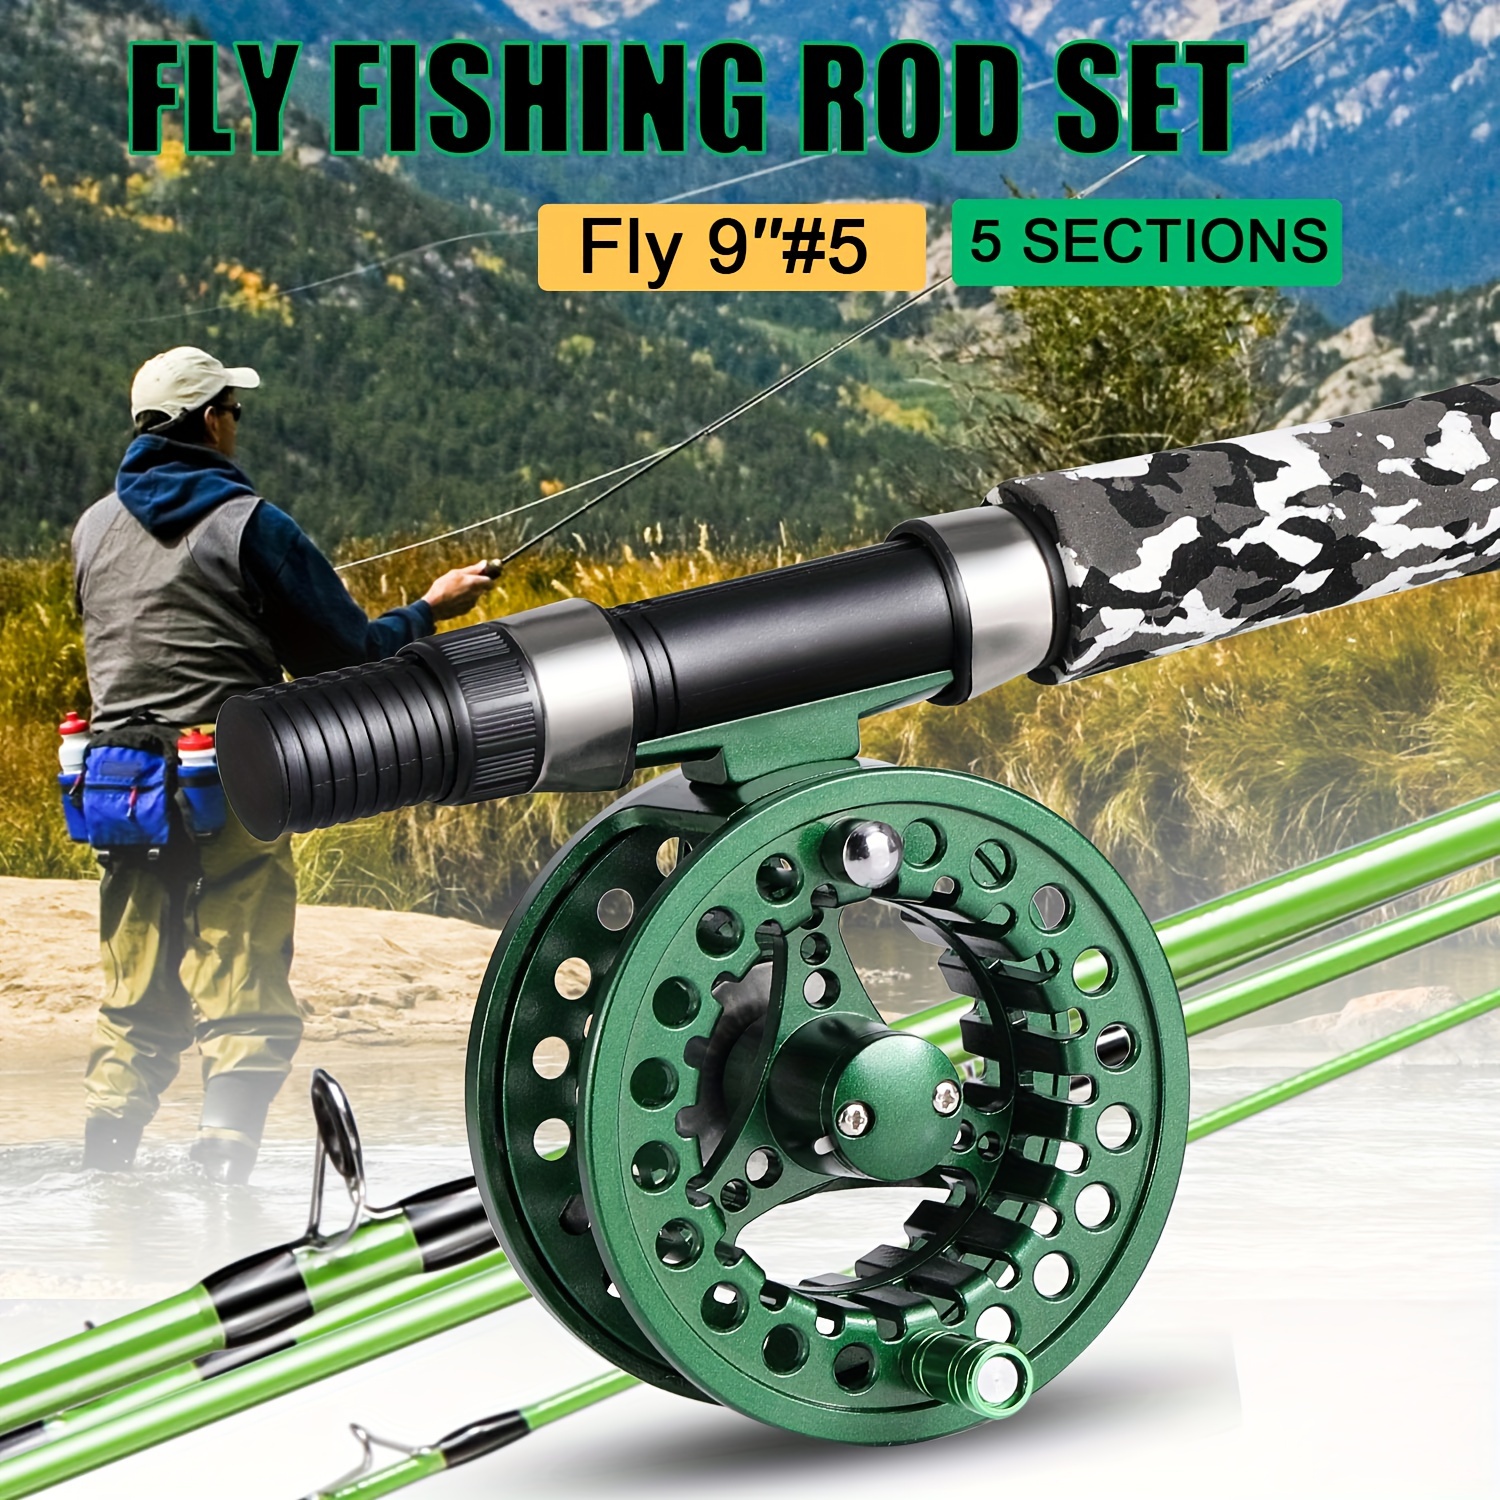 Sougayilang Fly Fishing Rod Reel Combos Kit 9FT Carbon Fiber Fly